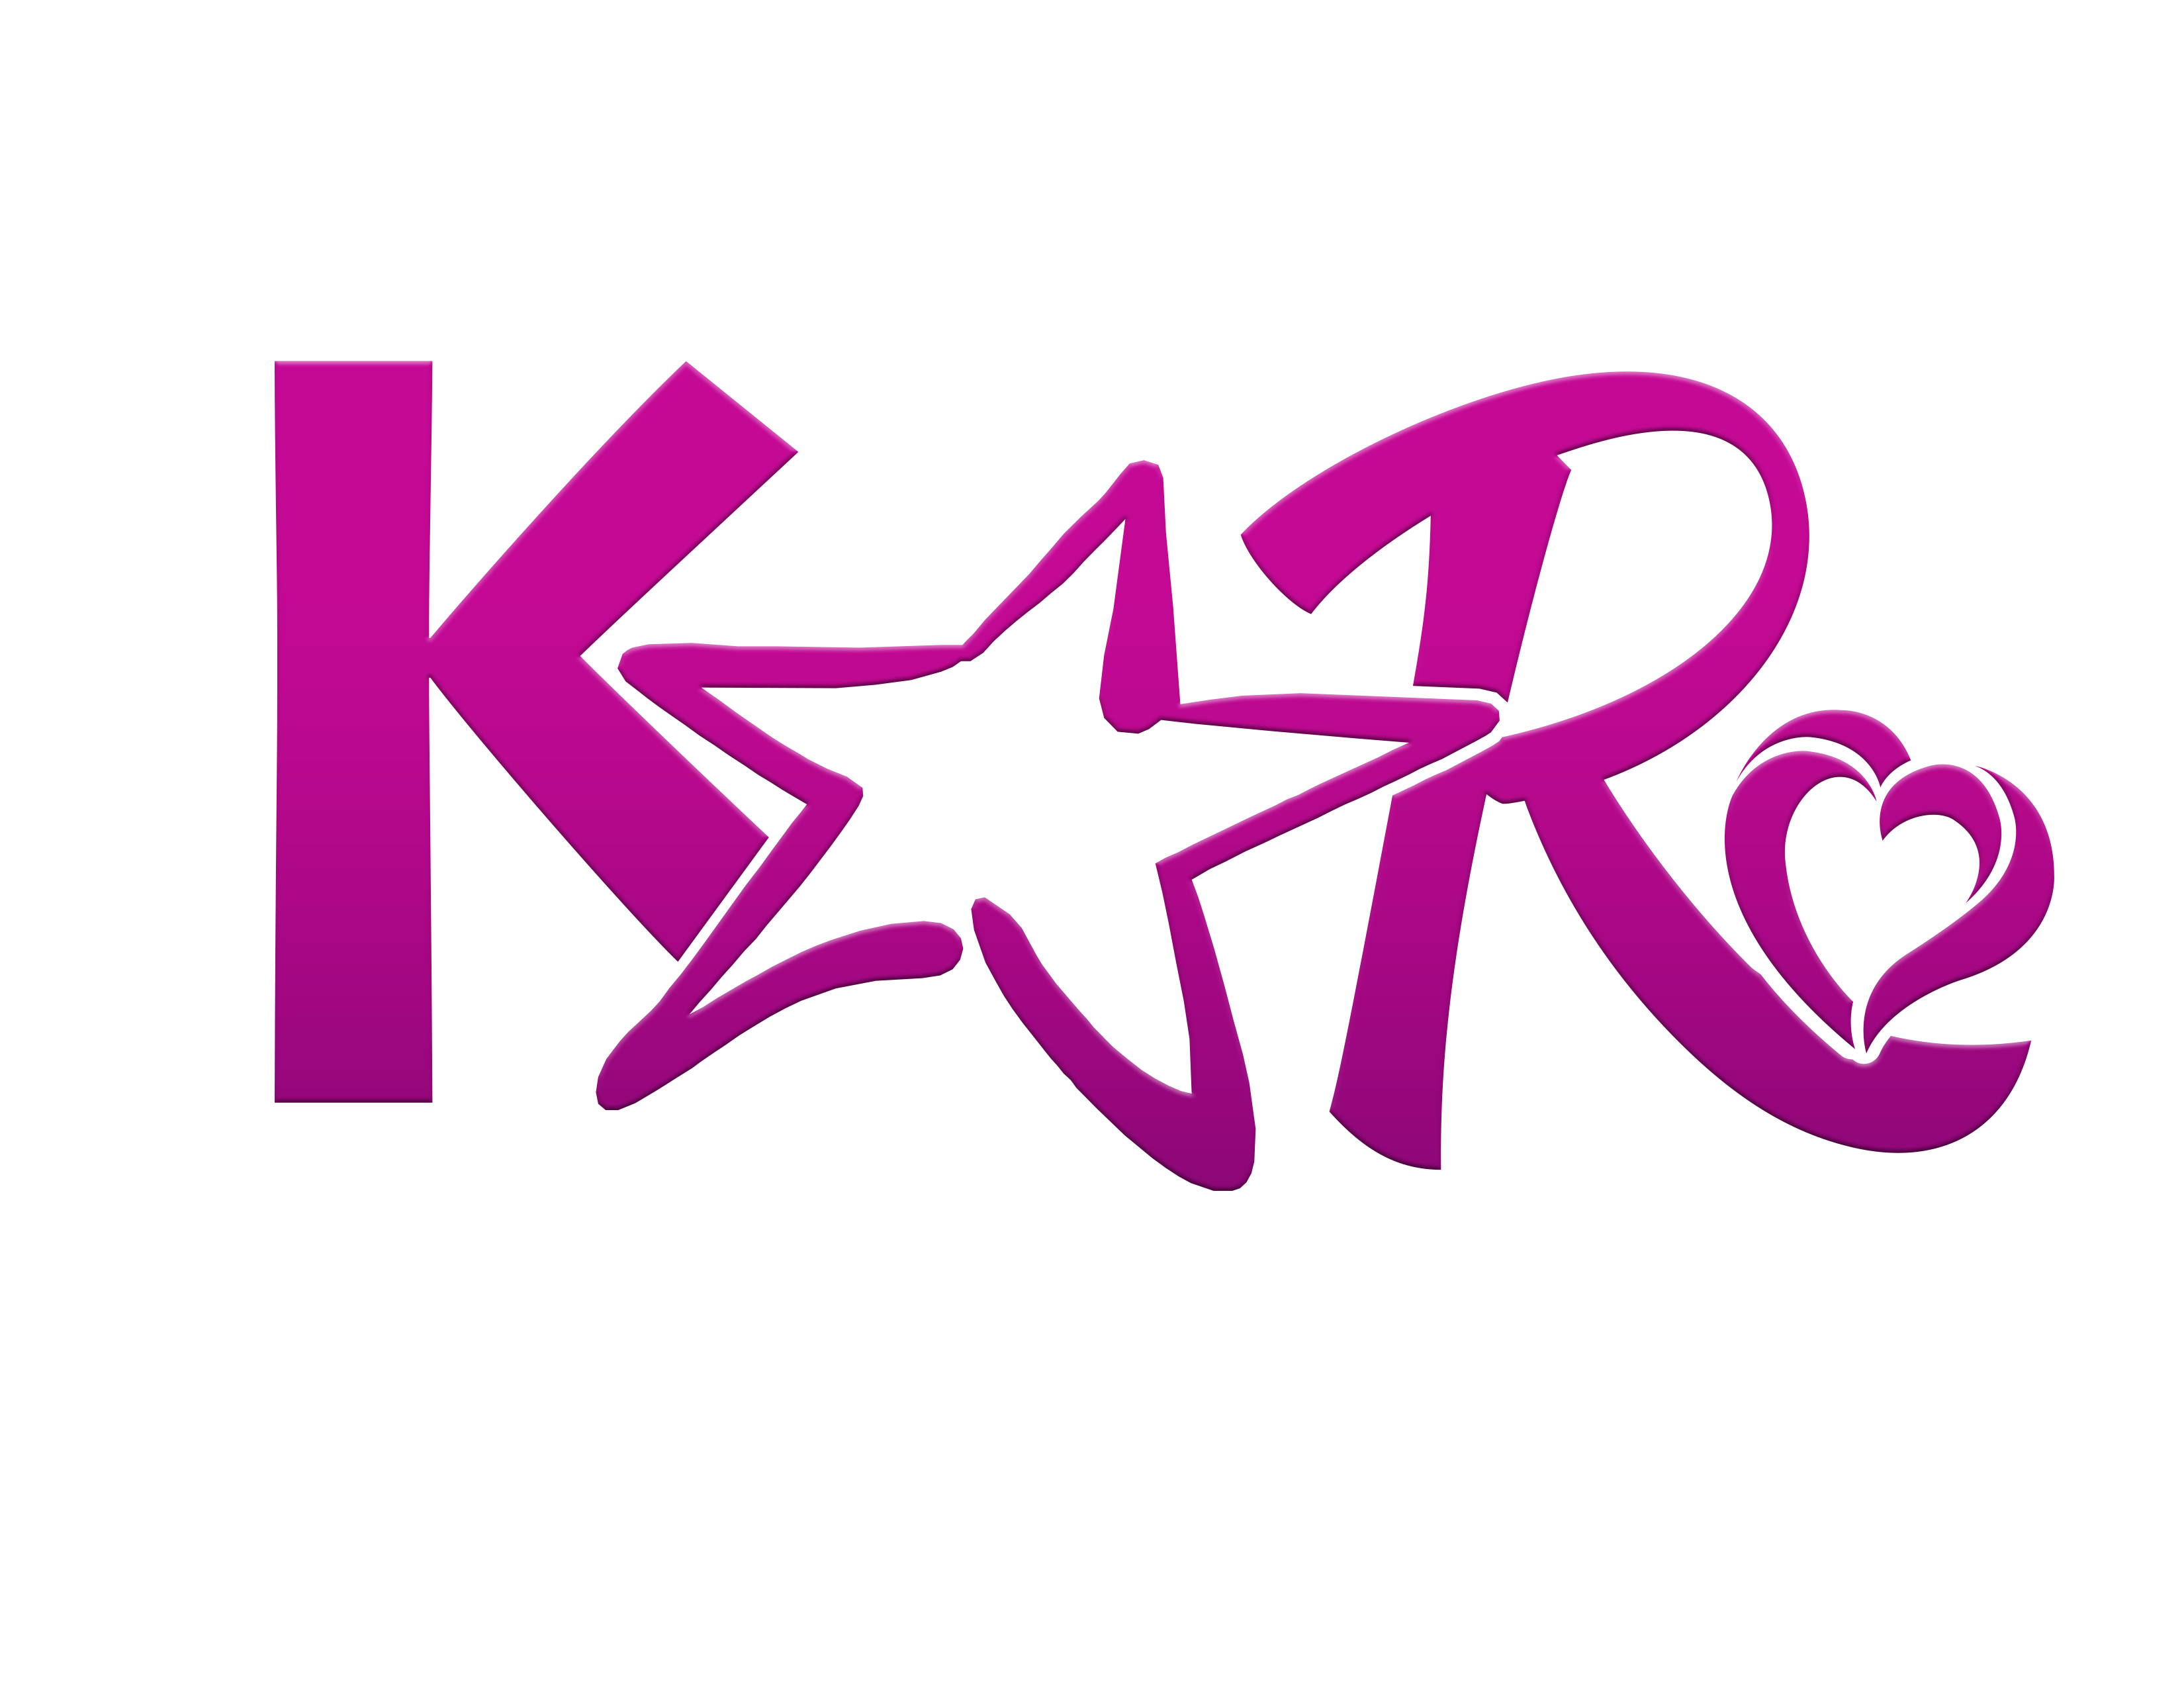 KAR HQ Closed until March 31, 2020